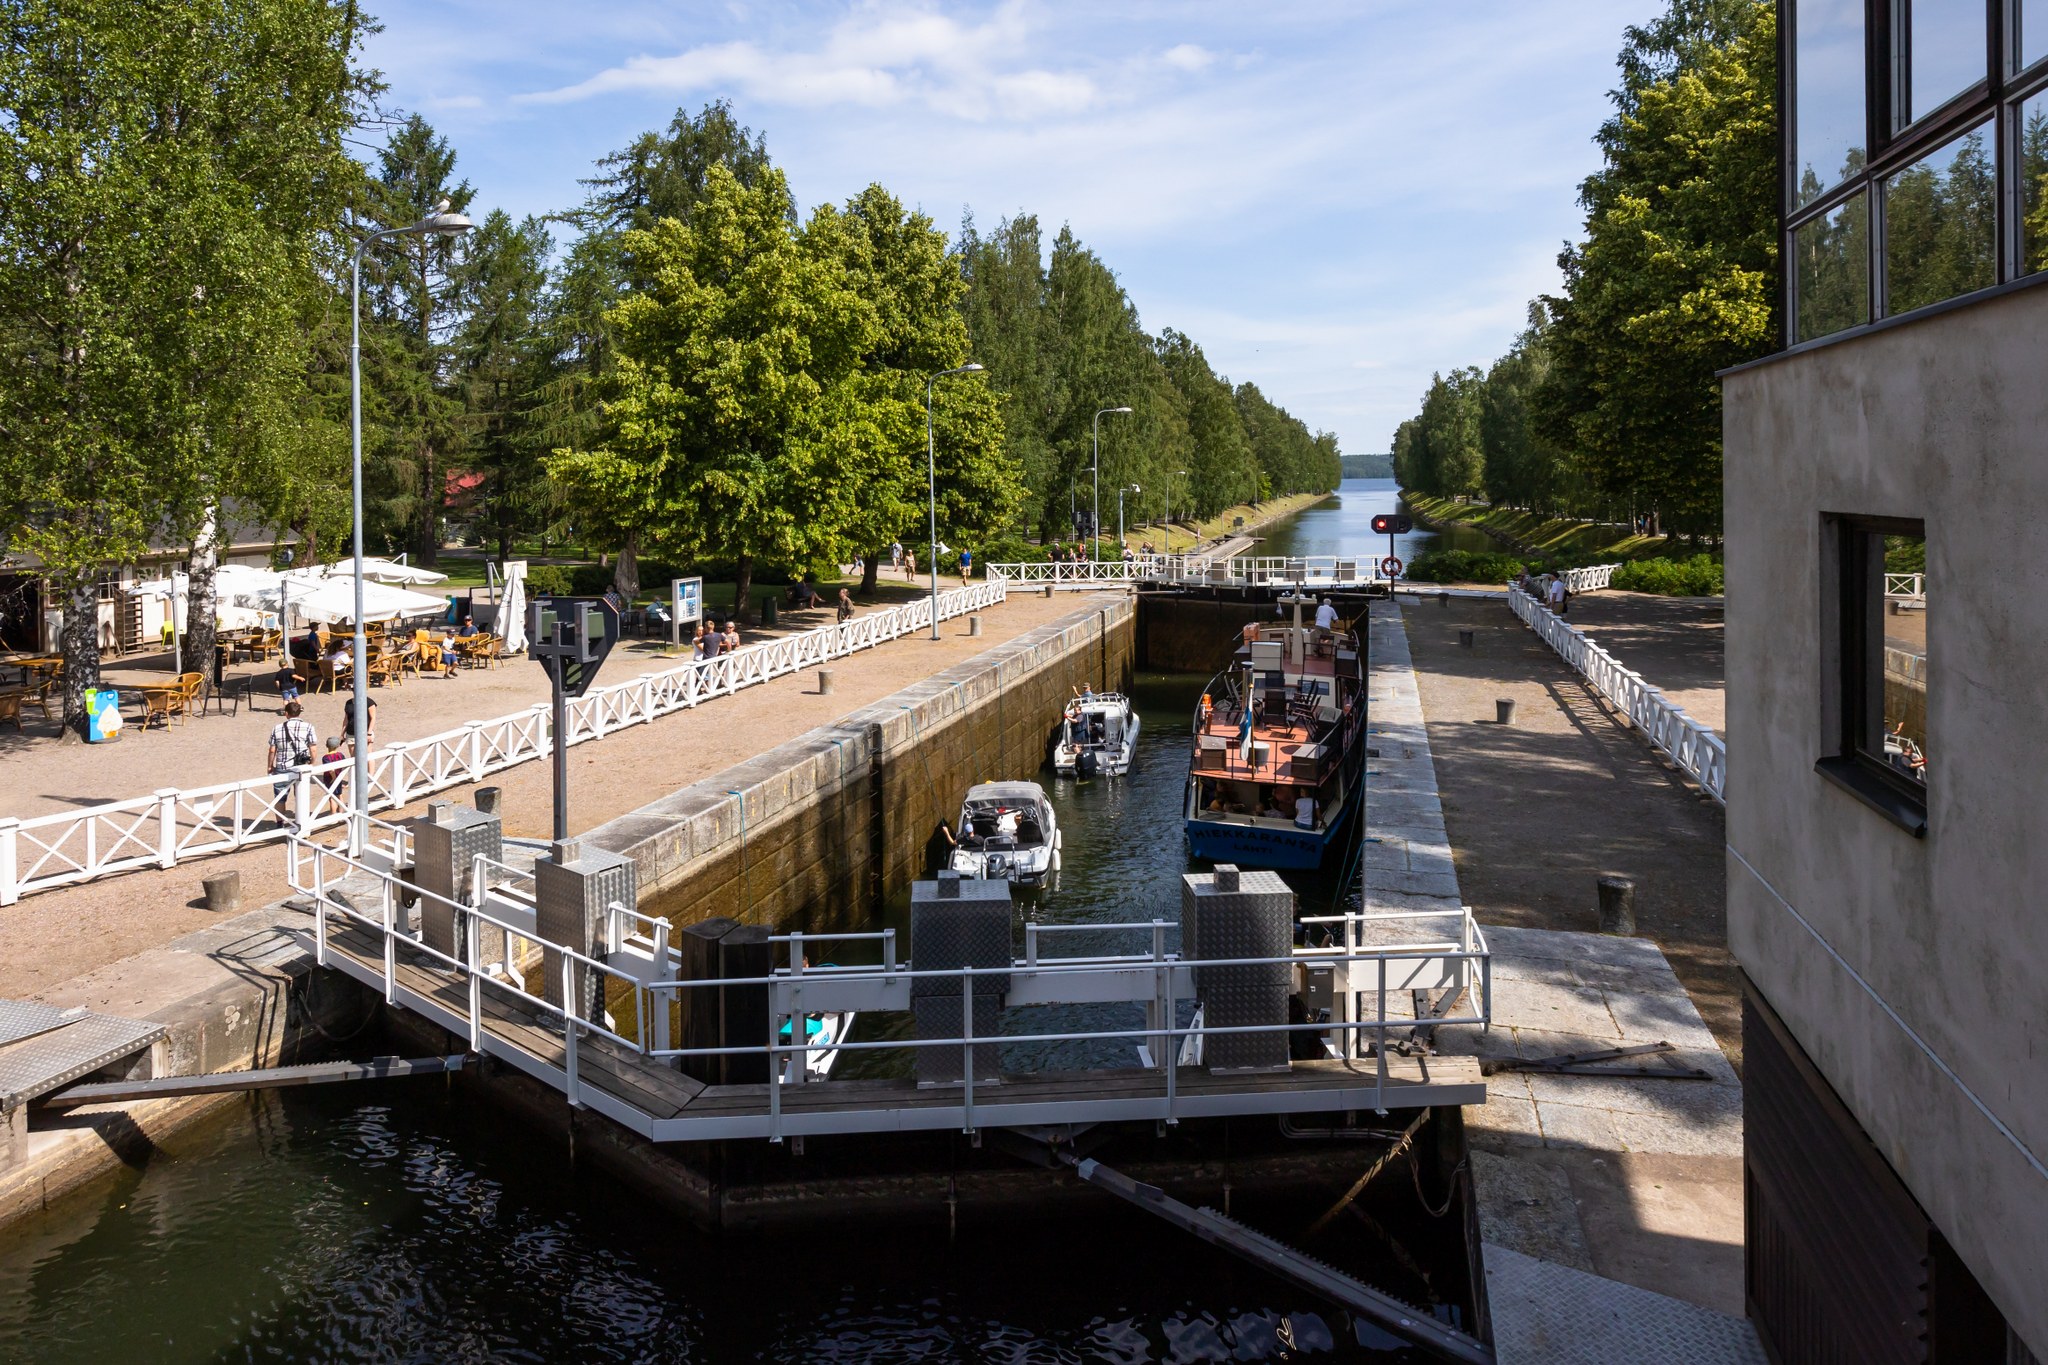 Busy boating summer 2021, record number of boats in Vääksy - Finnish  Transport Infrastructure Agency